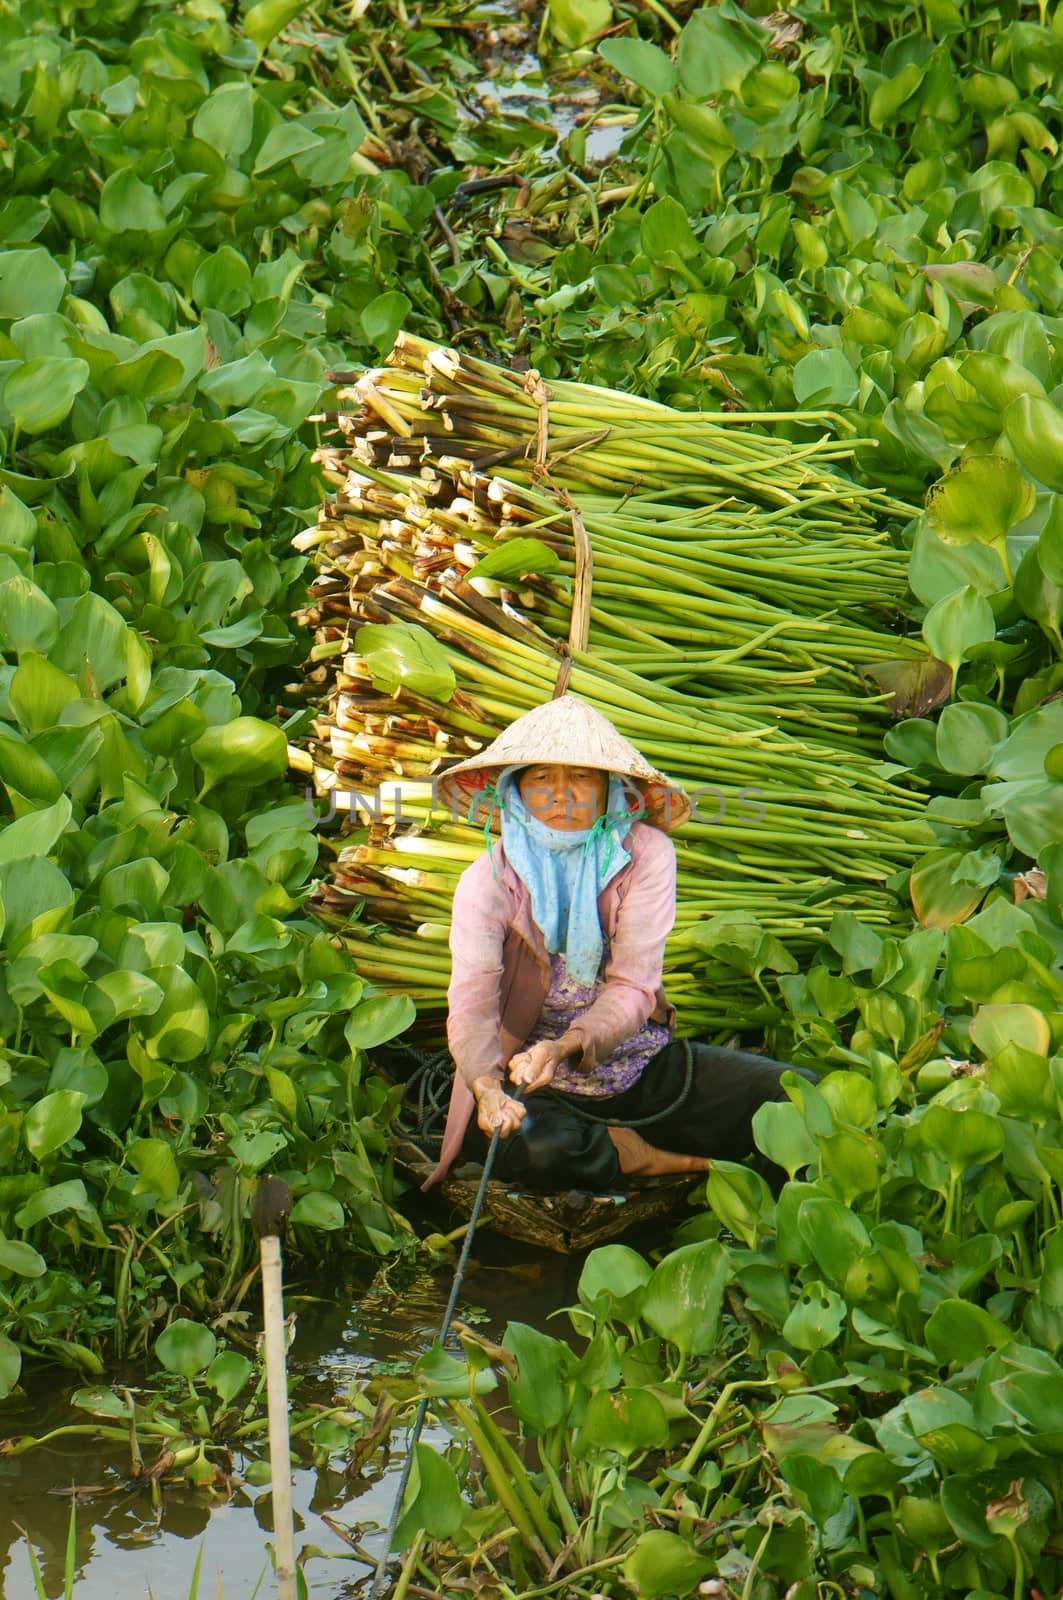 AN GIANG, VIET NAM- SEPT 20: Asian farmer harvest water hyacith (Eichhornia crassipes), Vietnamese woman work hard, carry hyainths bundle, material for art and craft production, Vietnam, Sept 20, 2014